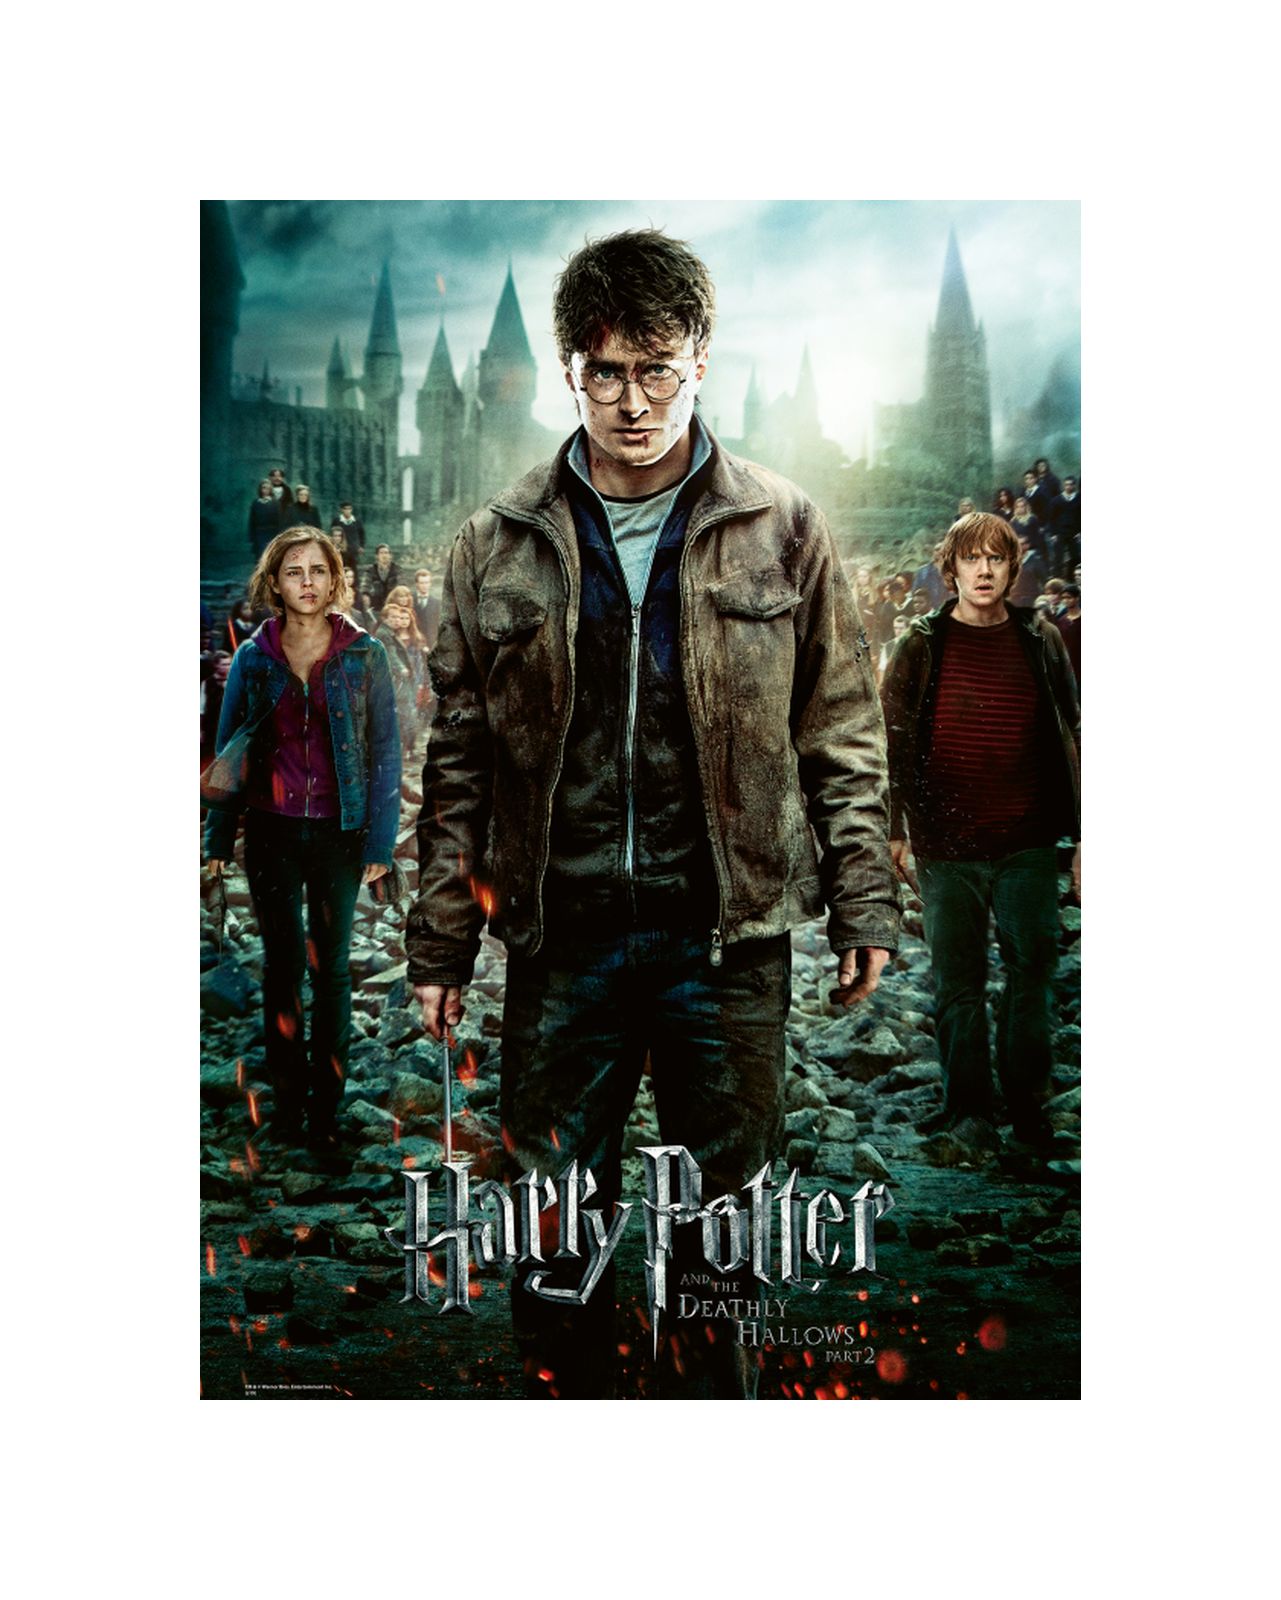 Ravensburger puzzle 300 pezzi xxl - harry potter - Harry Potter, RAVENSBURGER